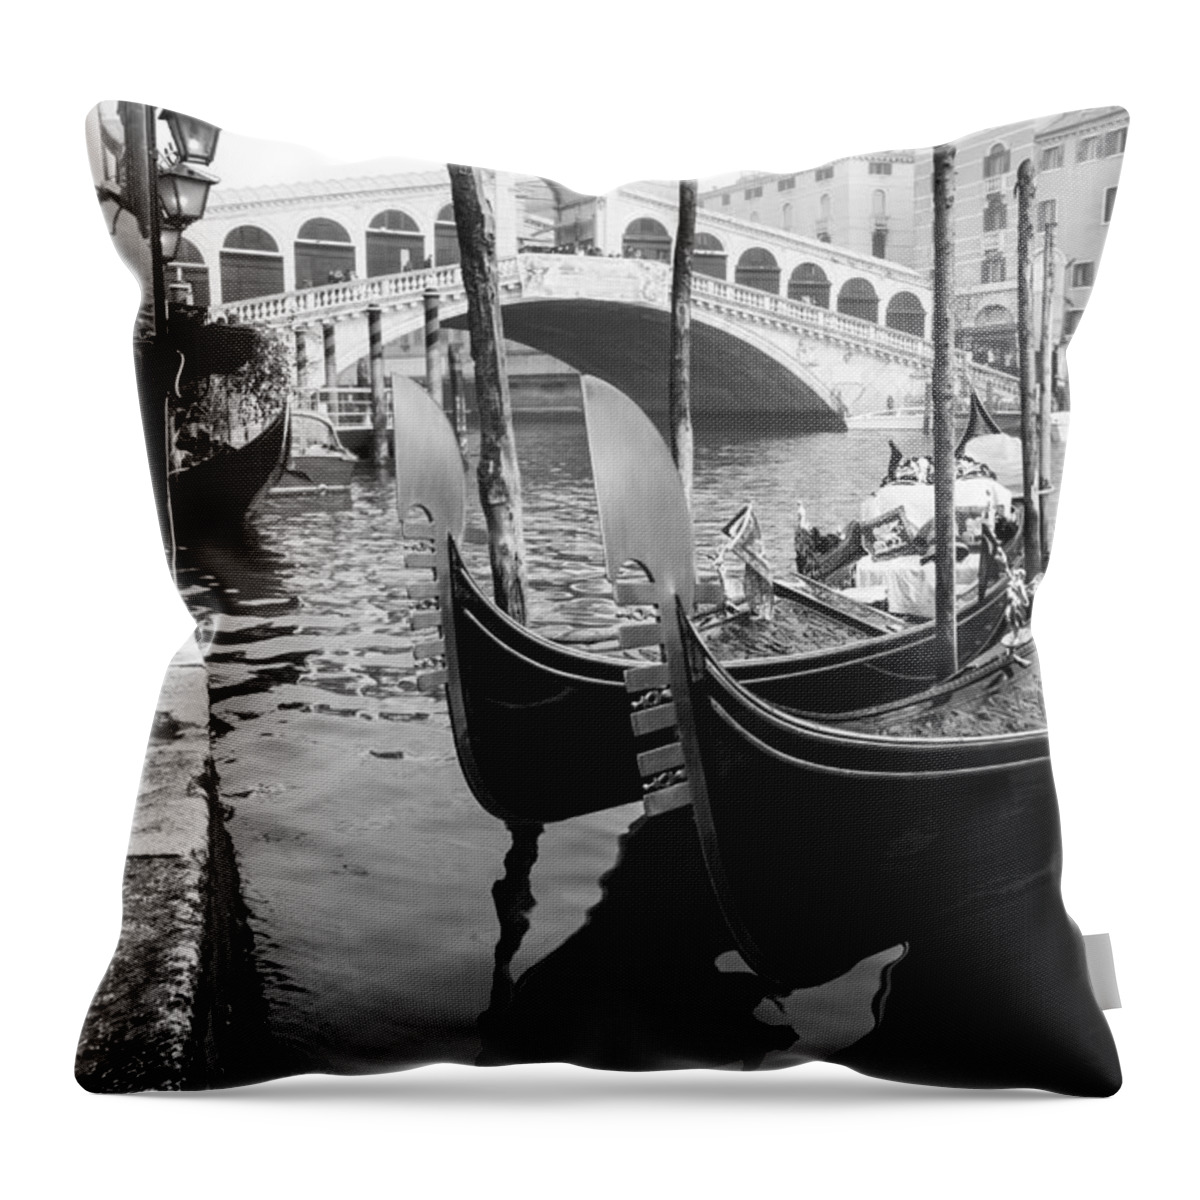 Venezia Throw Pillow featuring the photograph Gondole at Rialto Bridge by Marco Missiaja